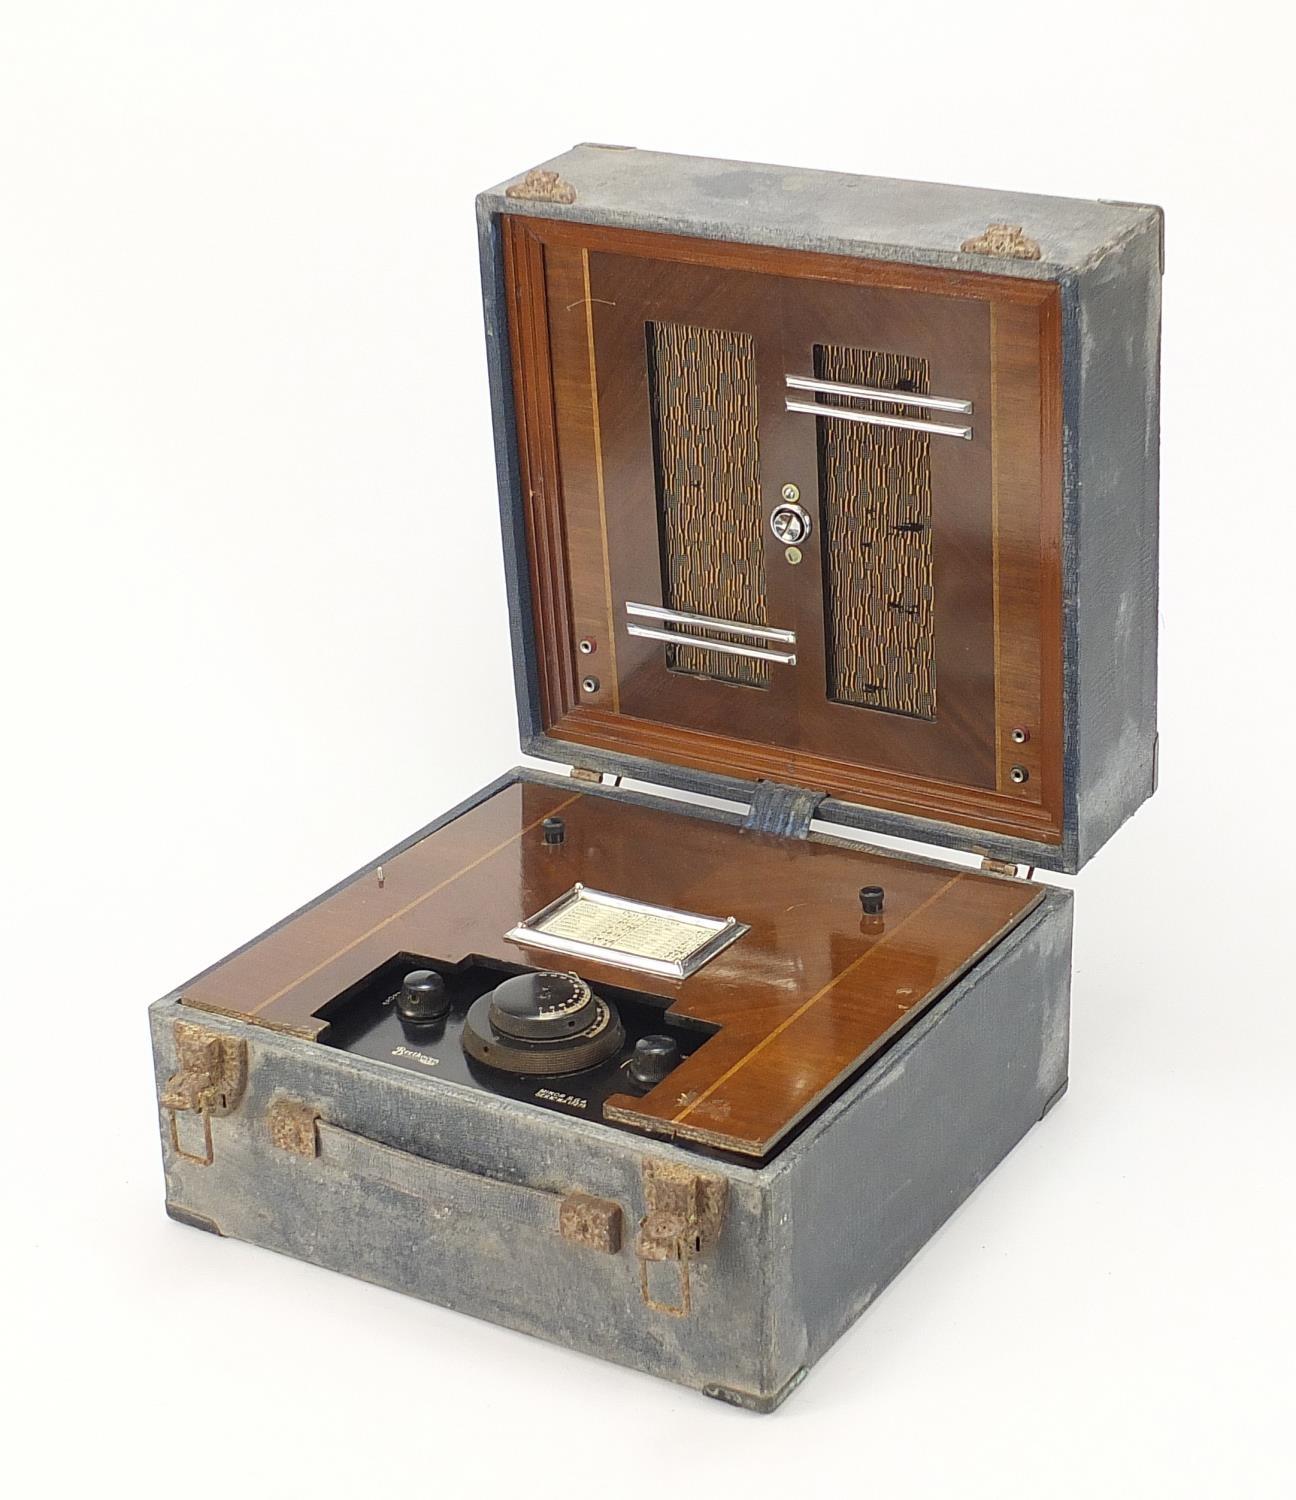 Vintage Beethoven radio with original Vidor battery, 23.5cm H x 35cm W x 33cm D